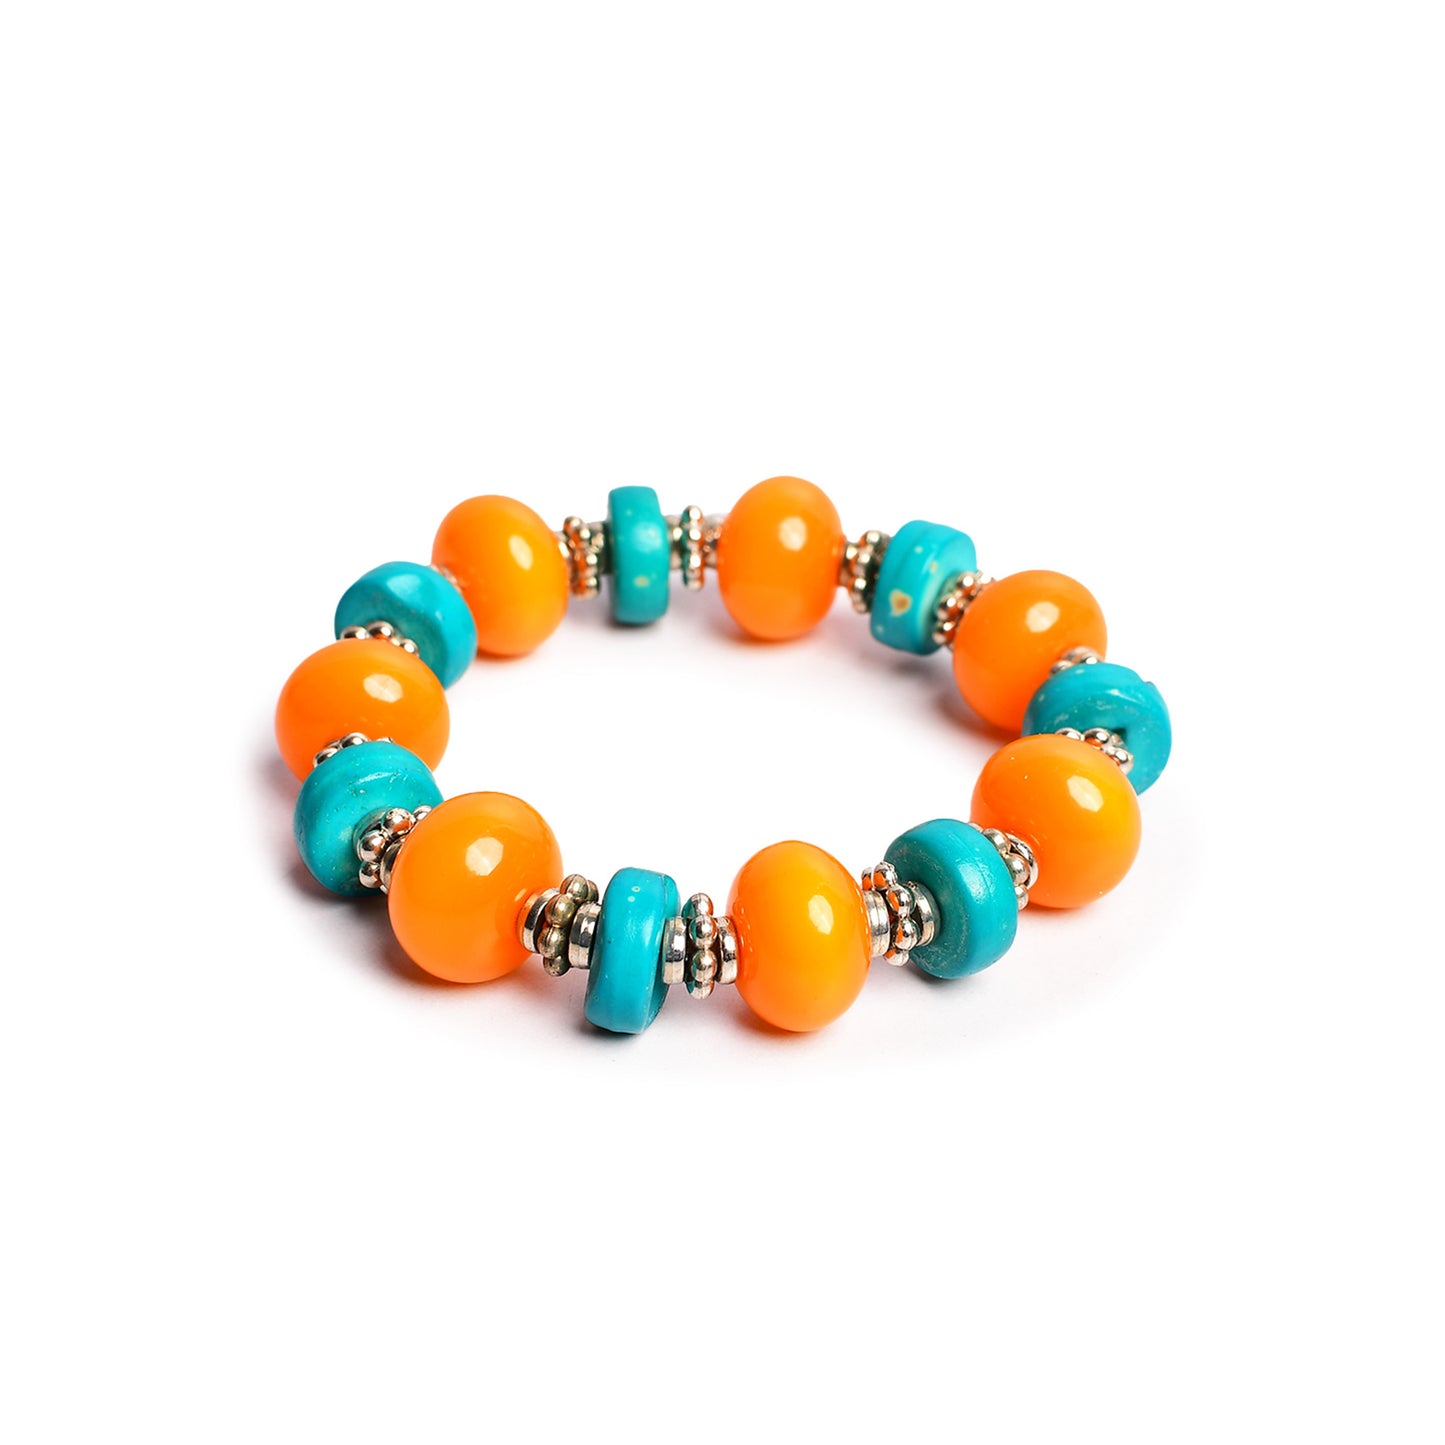 Orange & Turquoise Beaded Stretchable Bracelet by Bamboo Tree Jewels